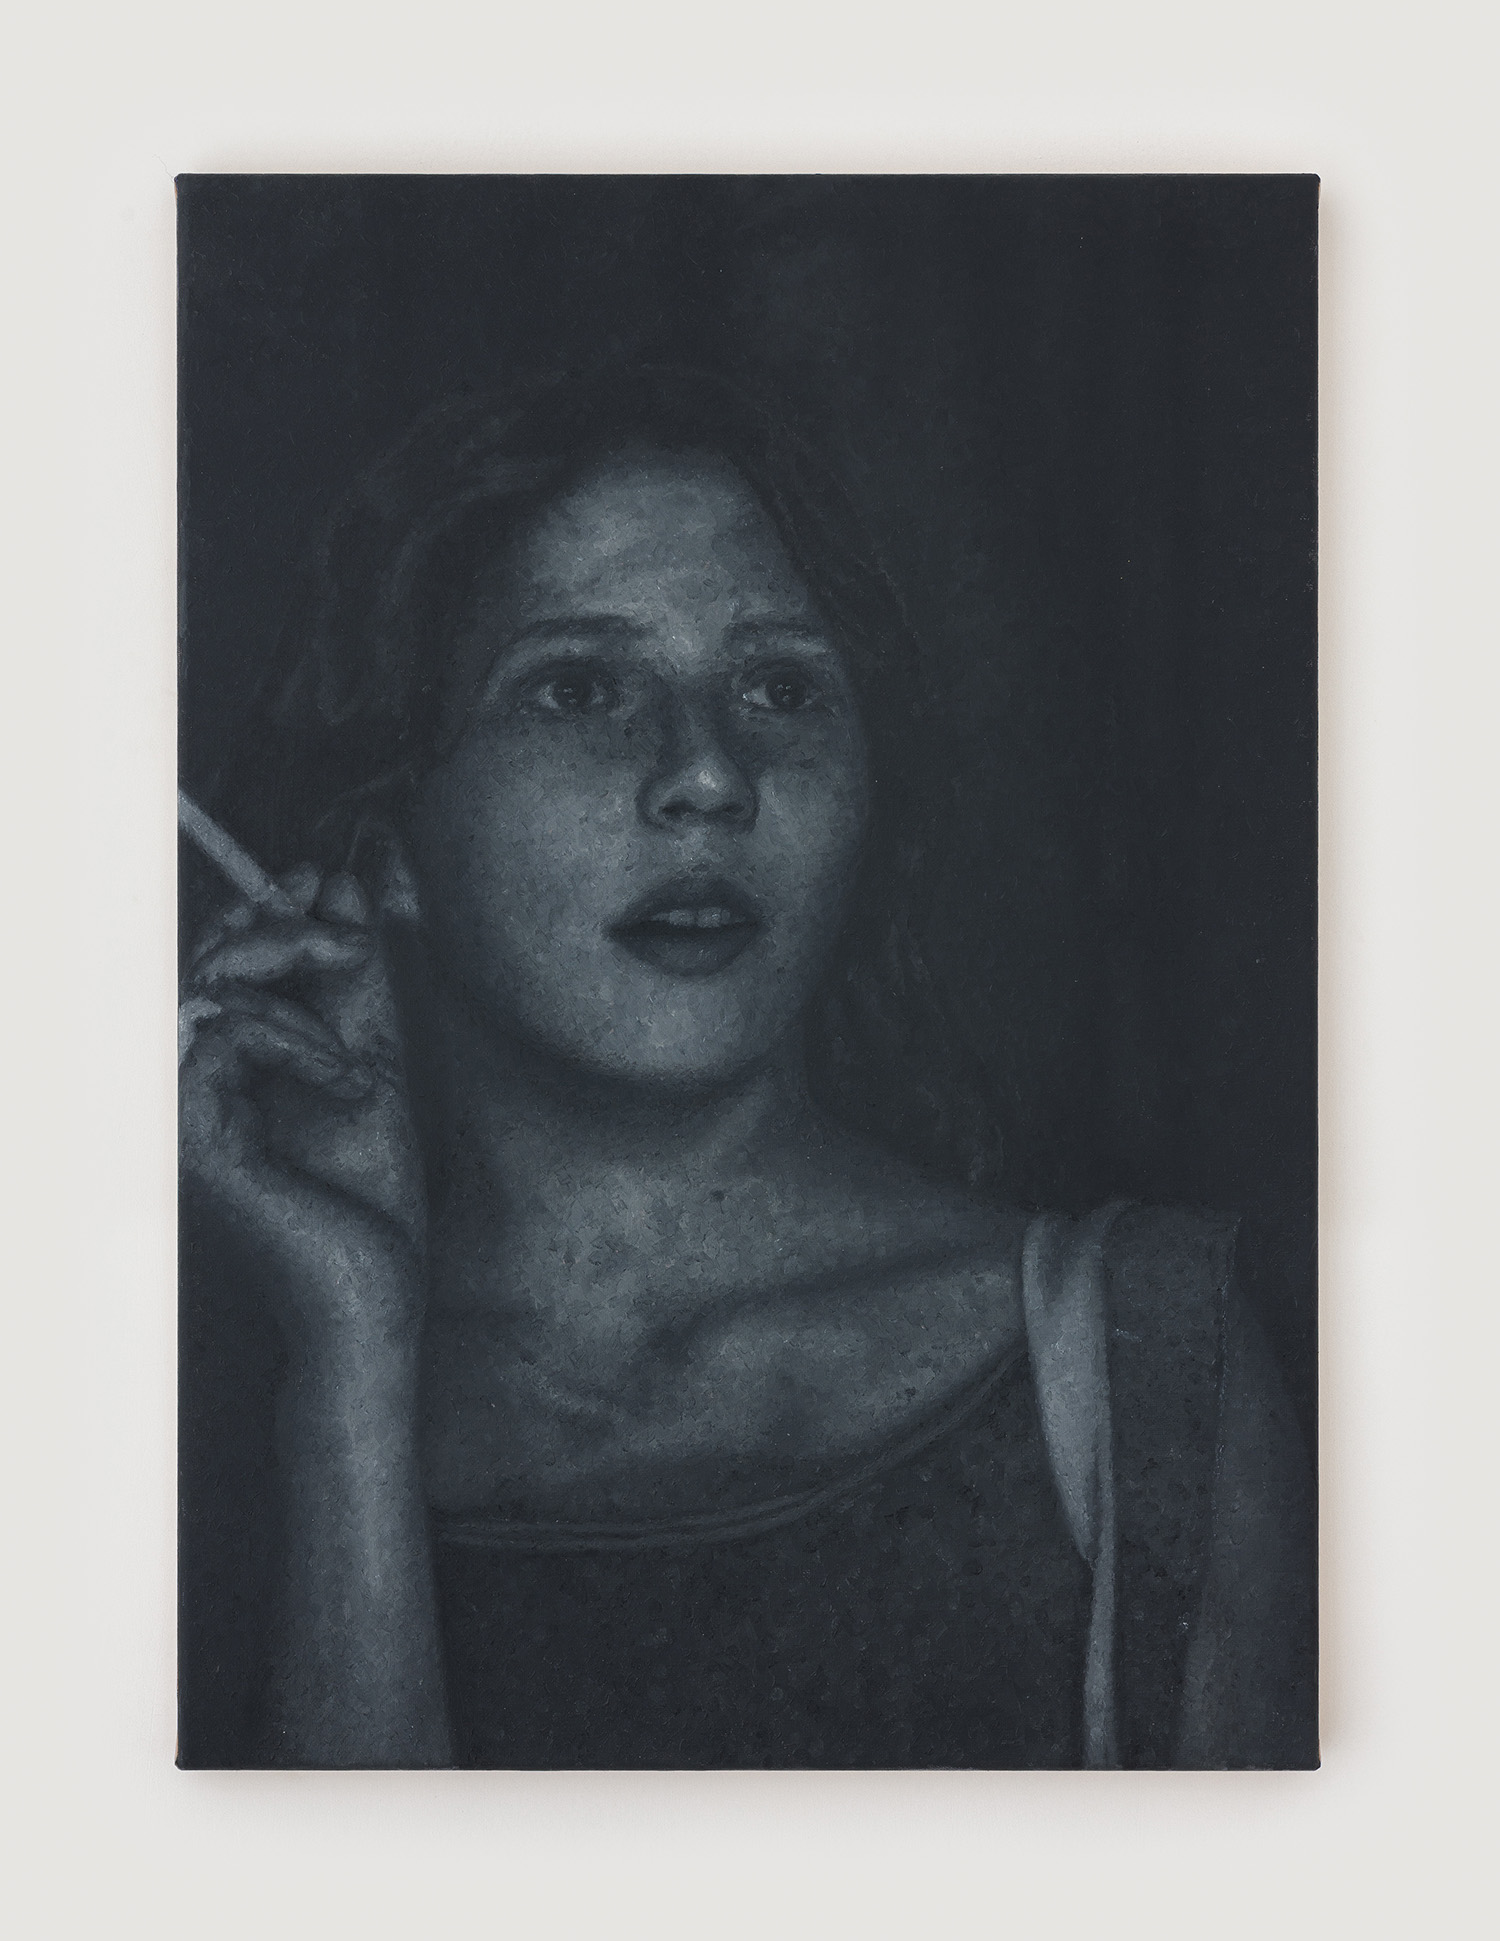 Paco König, Untitled (Mamiya), 2022, oil on linen, 70 x 50 cm, 27 1/2 x 19 3/4 in